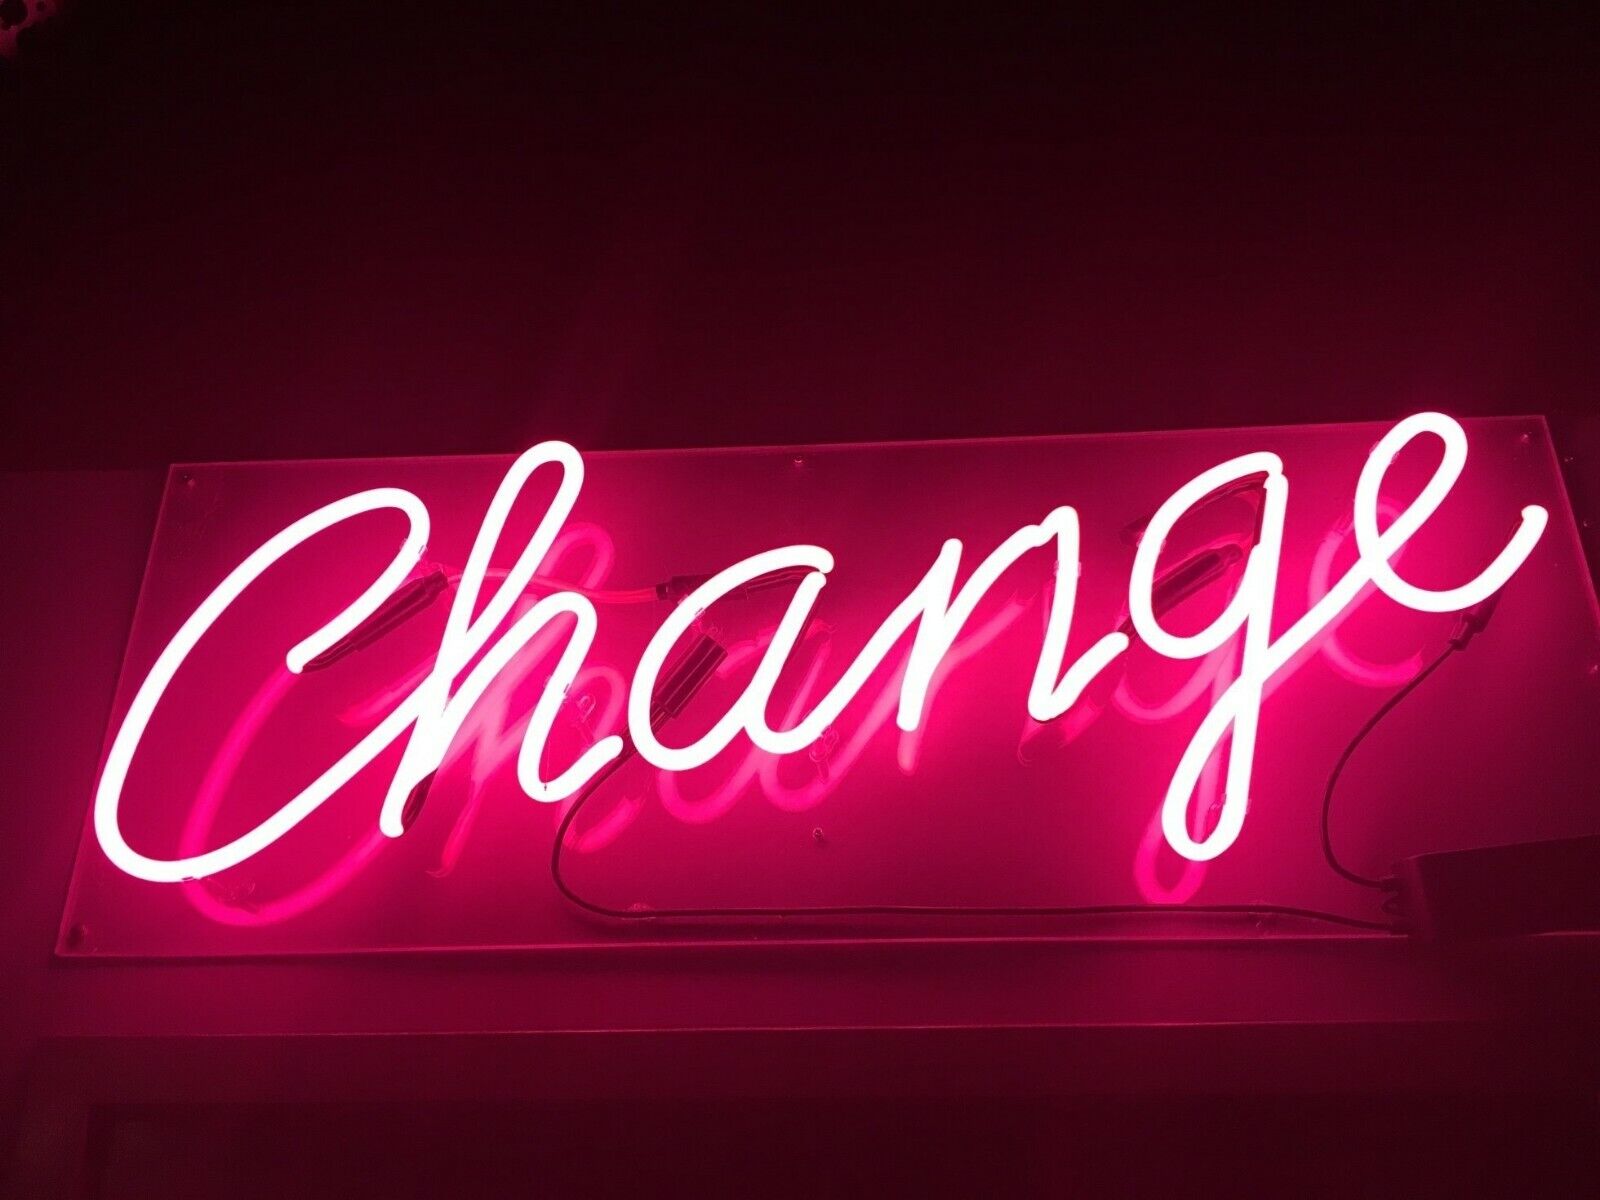 Change neon sign